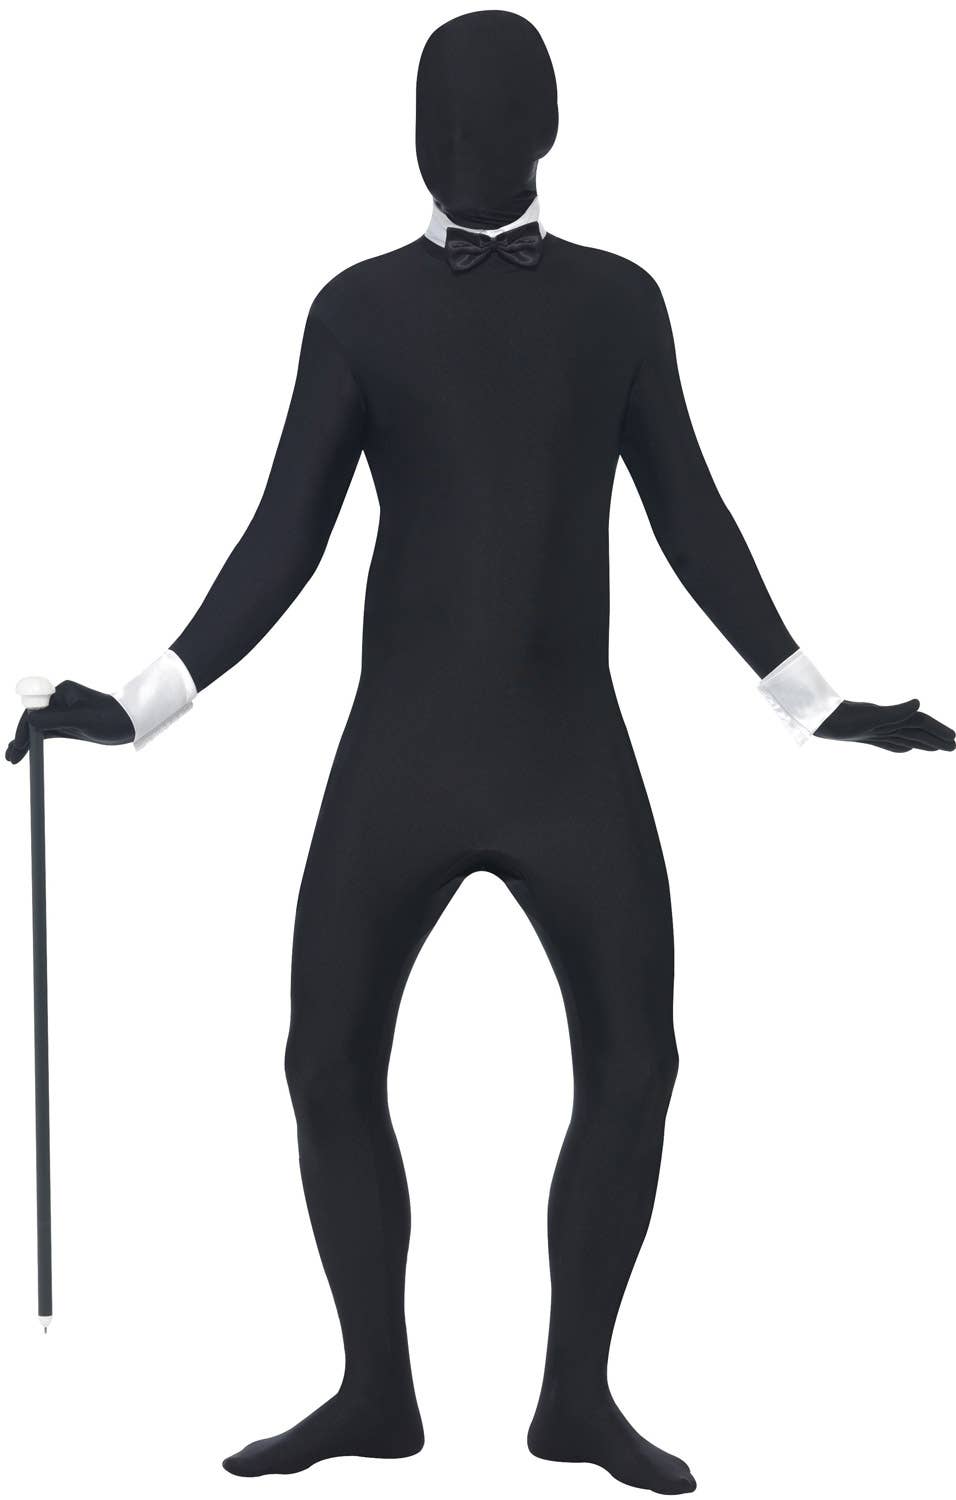 Men's Black Lycra Full Body Suit Second Skin Fancy Dress Costume View 2 